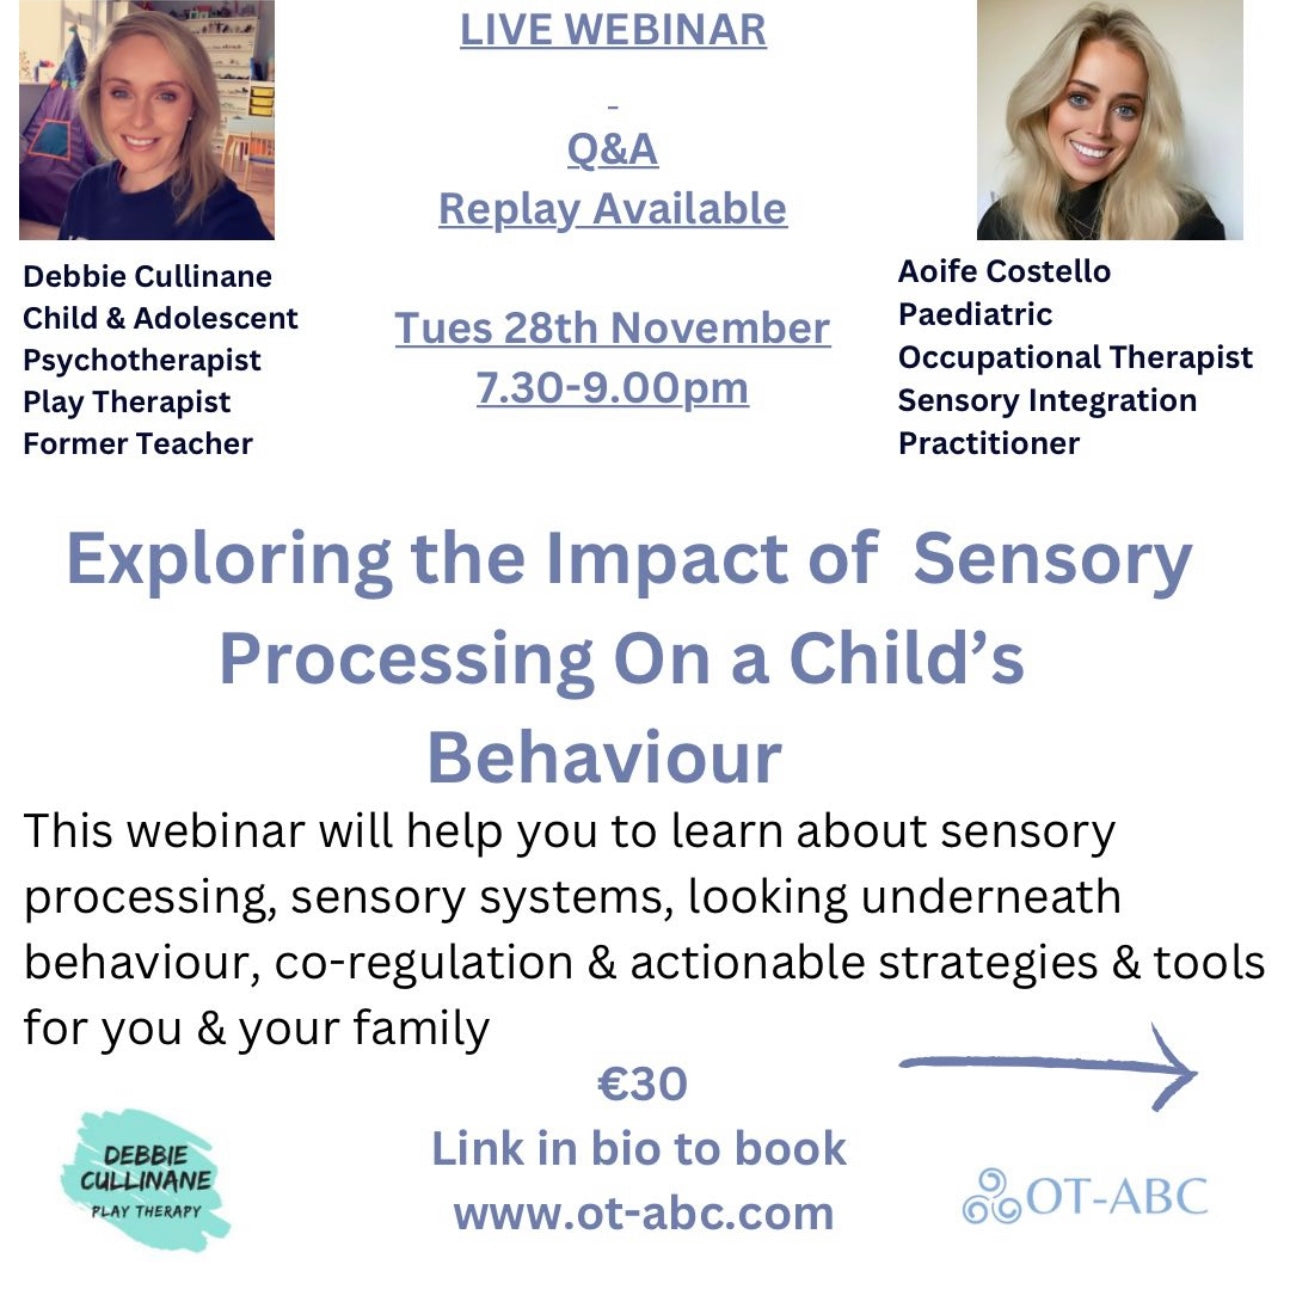 WEBINAR: “Exploring the Impact of Sensory Processing On a Child’s Behaviour”